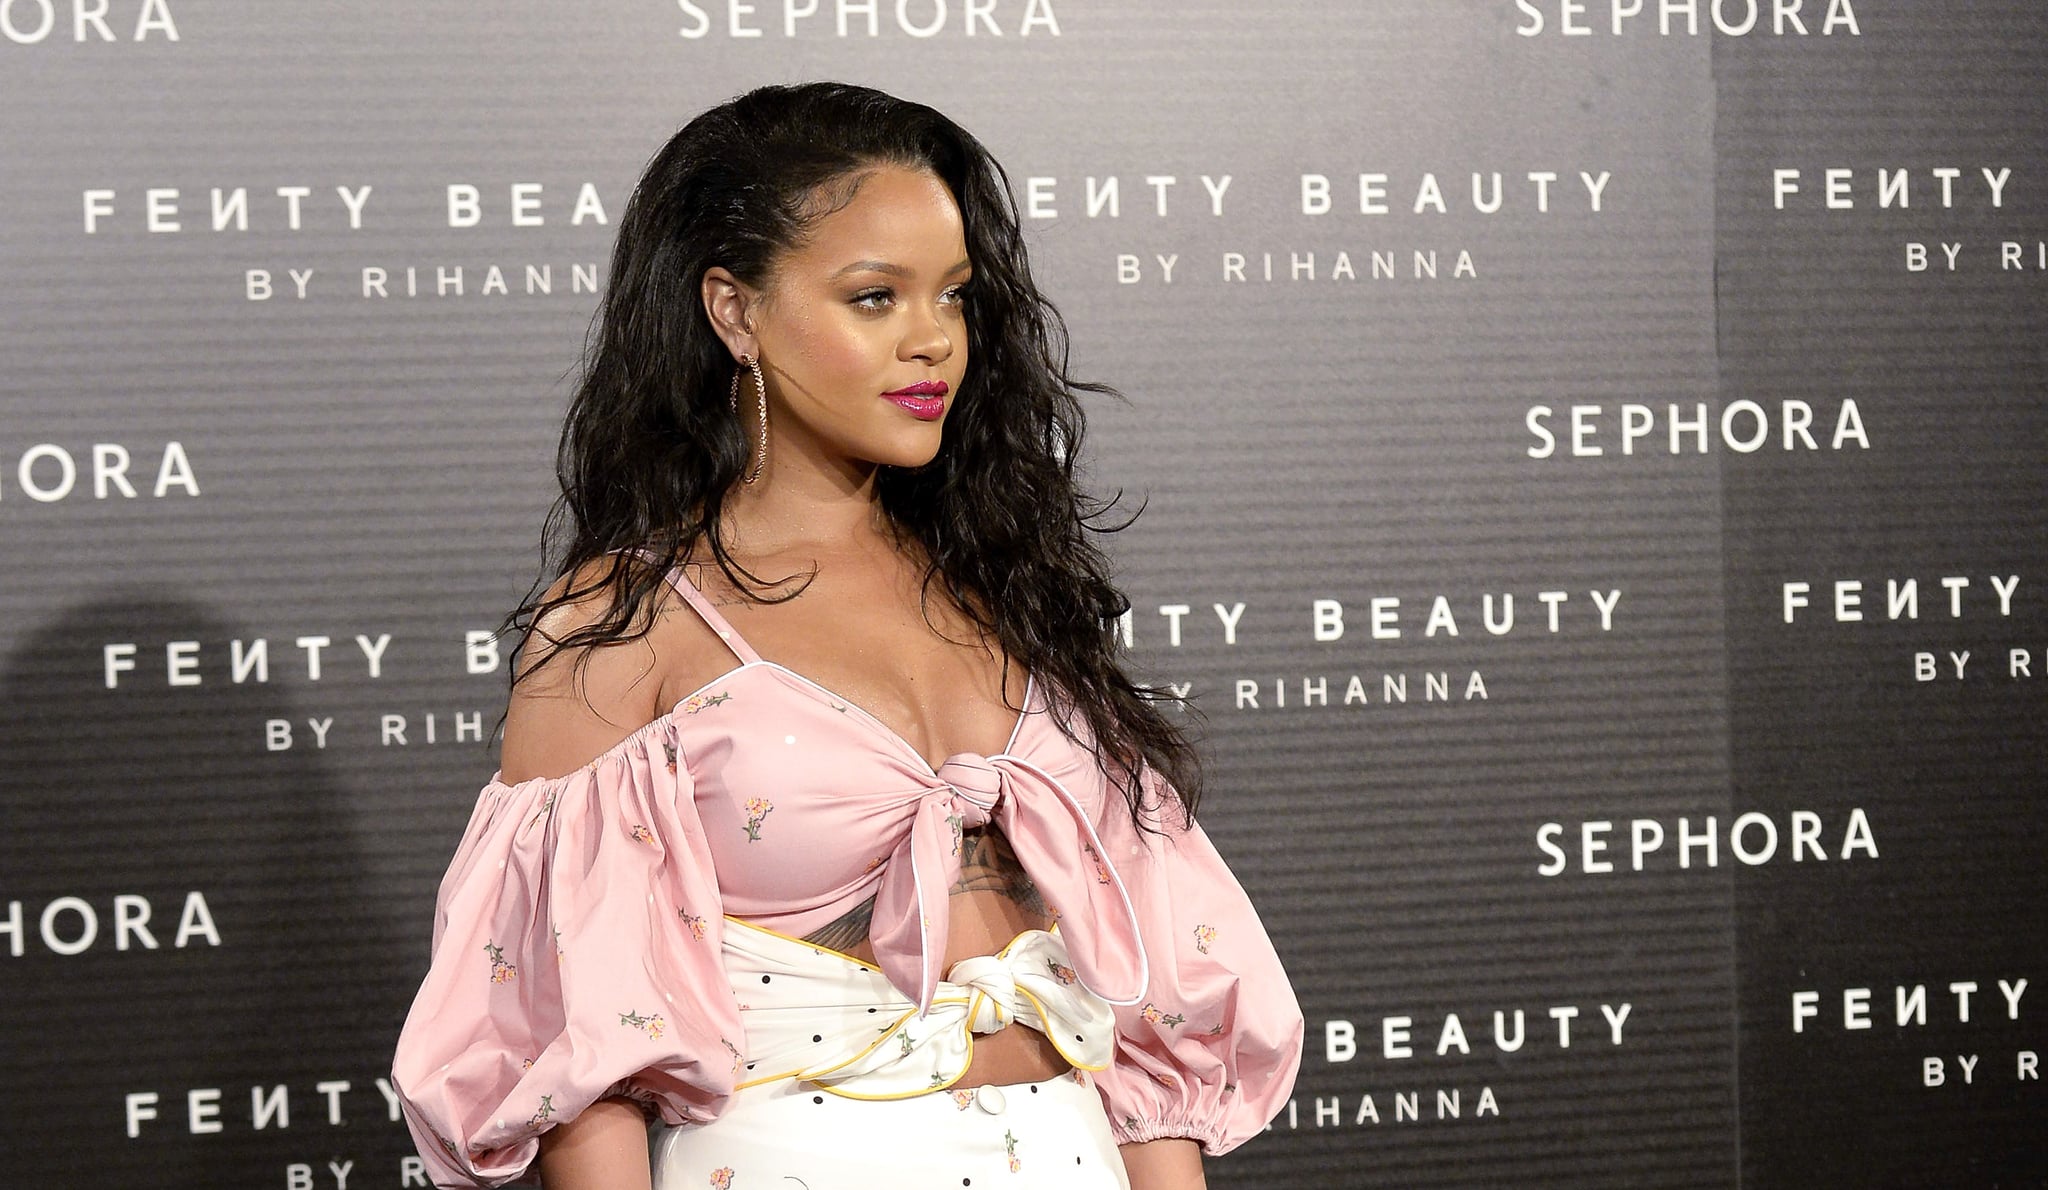 MADRID, SPAIN - SEPTEMBER 23:  Rihanna attends the Fenty Beauty by Rihanna presentation at Callao Cinemas on September 23, 2017 in Madrid, Spain.  (Photo by Fotonoticias/FilmMagic)